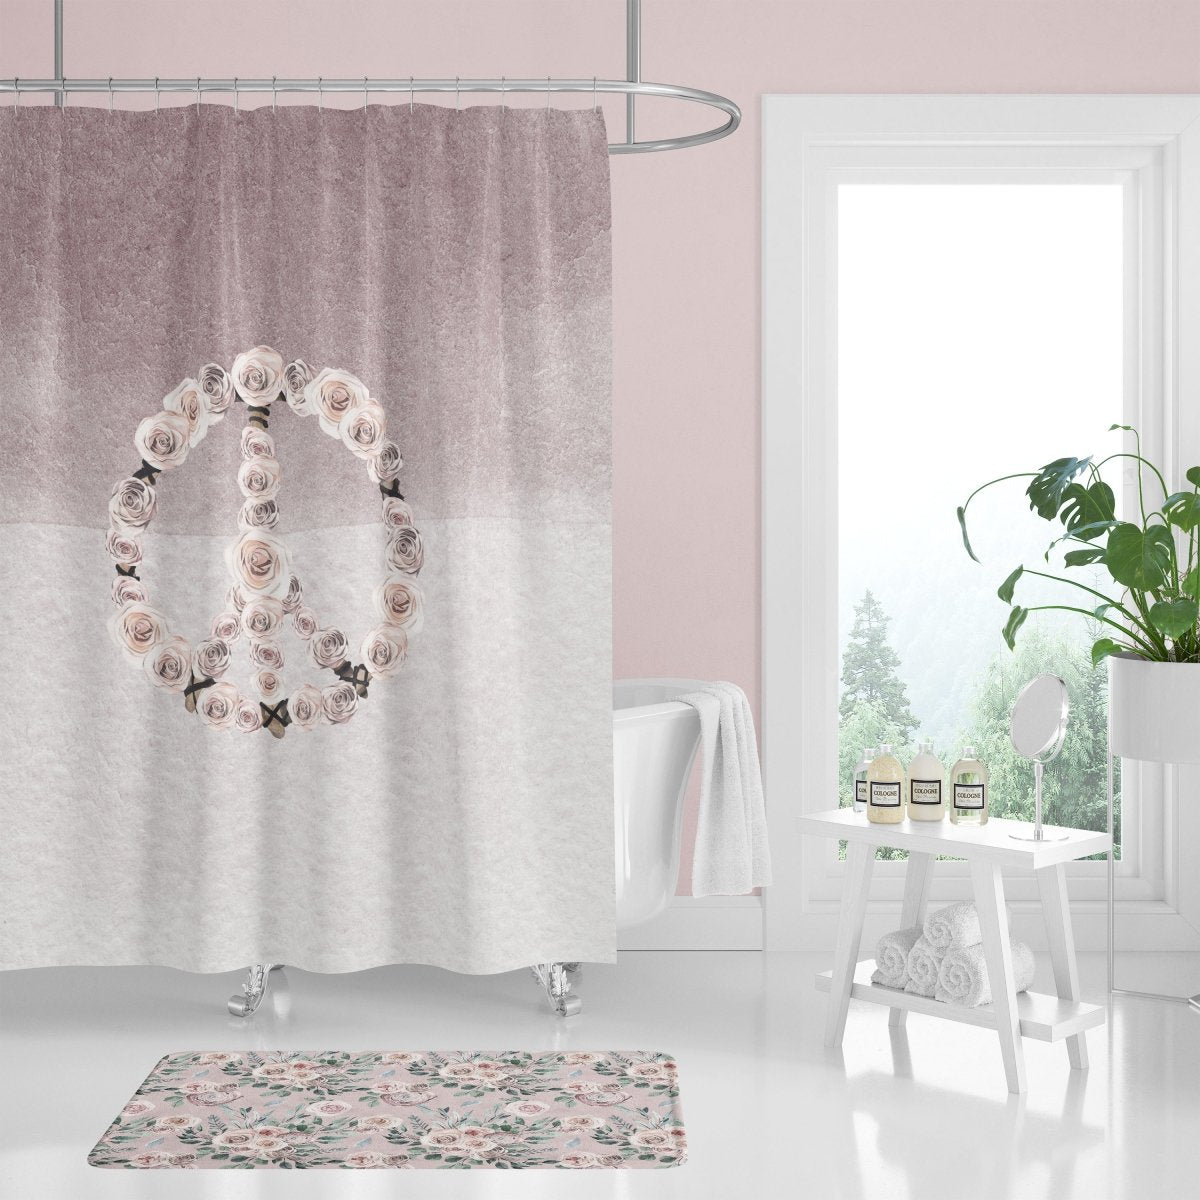 Boho Rose Bathroom Collection - Boho Rose, gender_girl, Theme_Boho